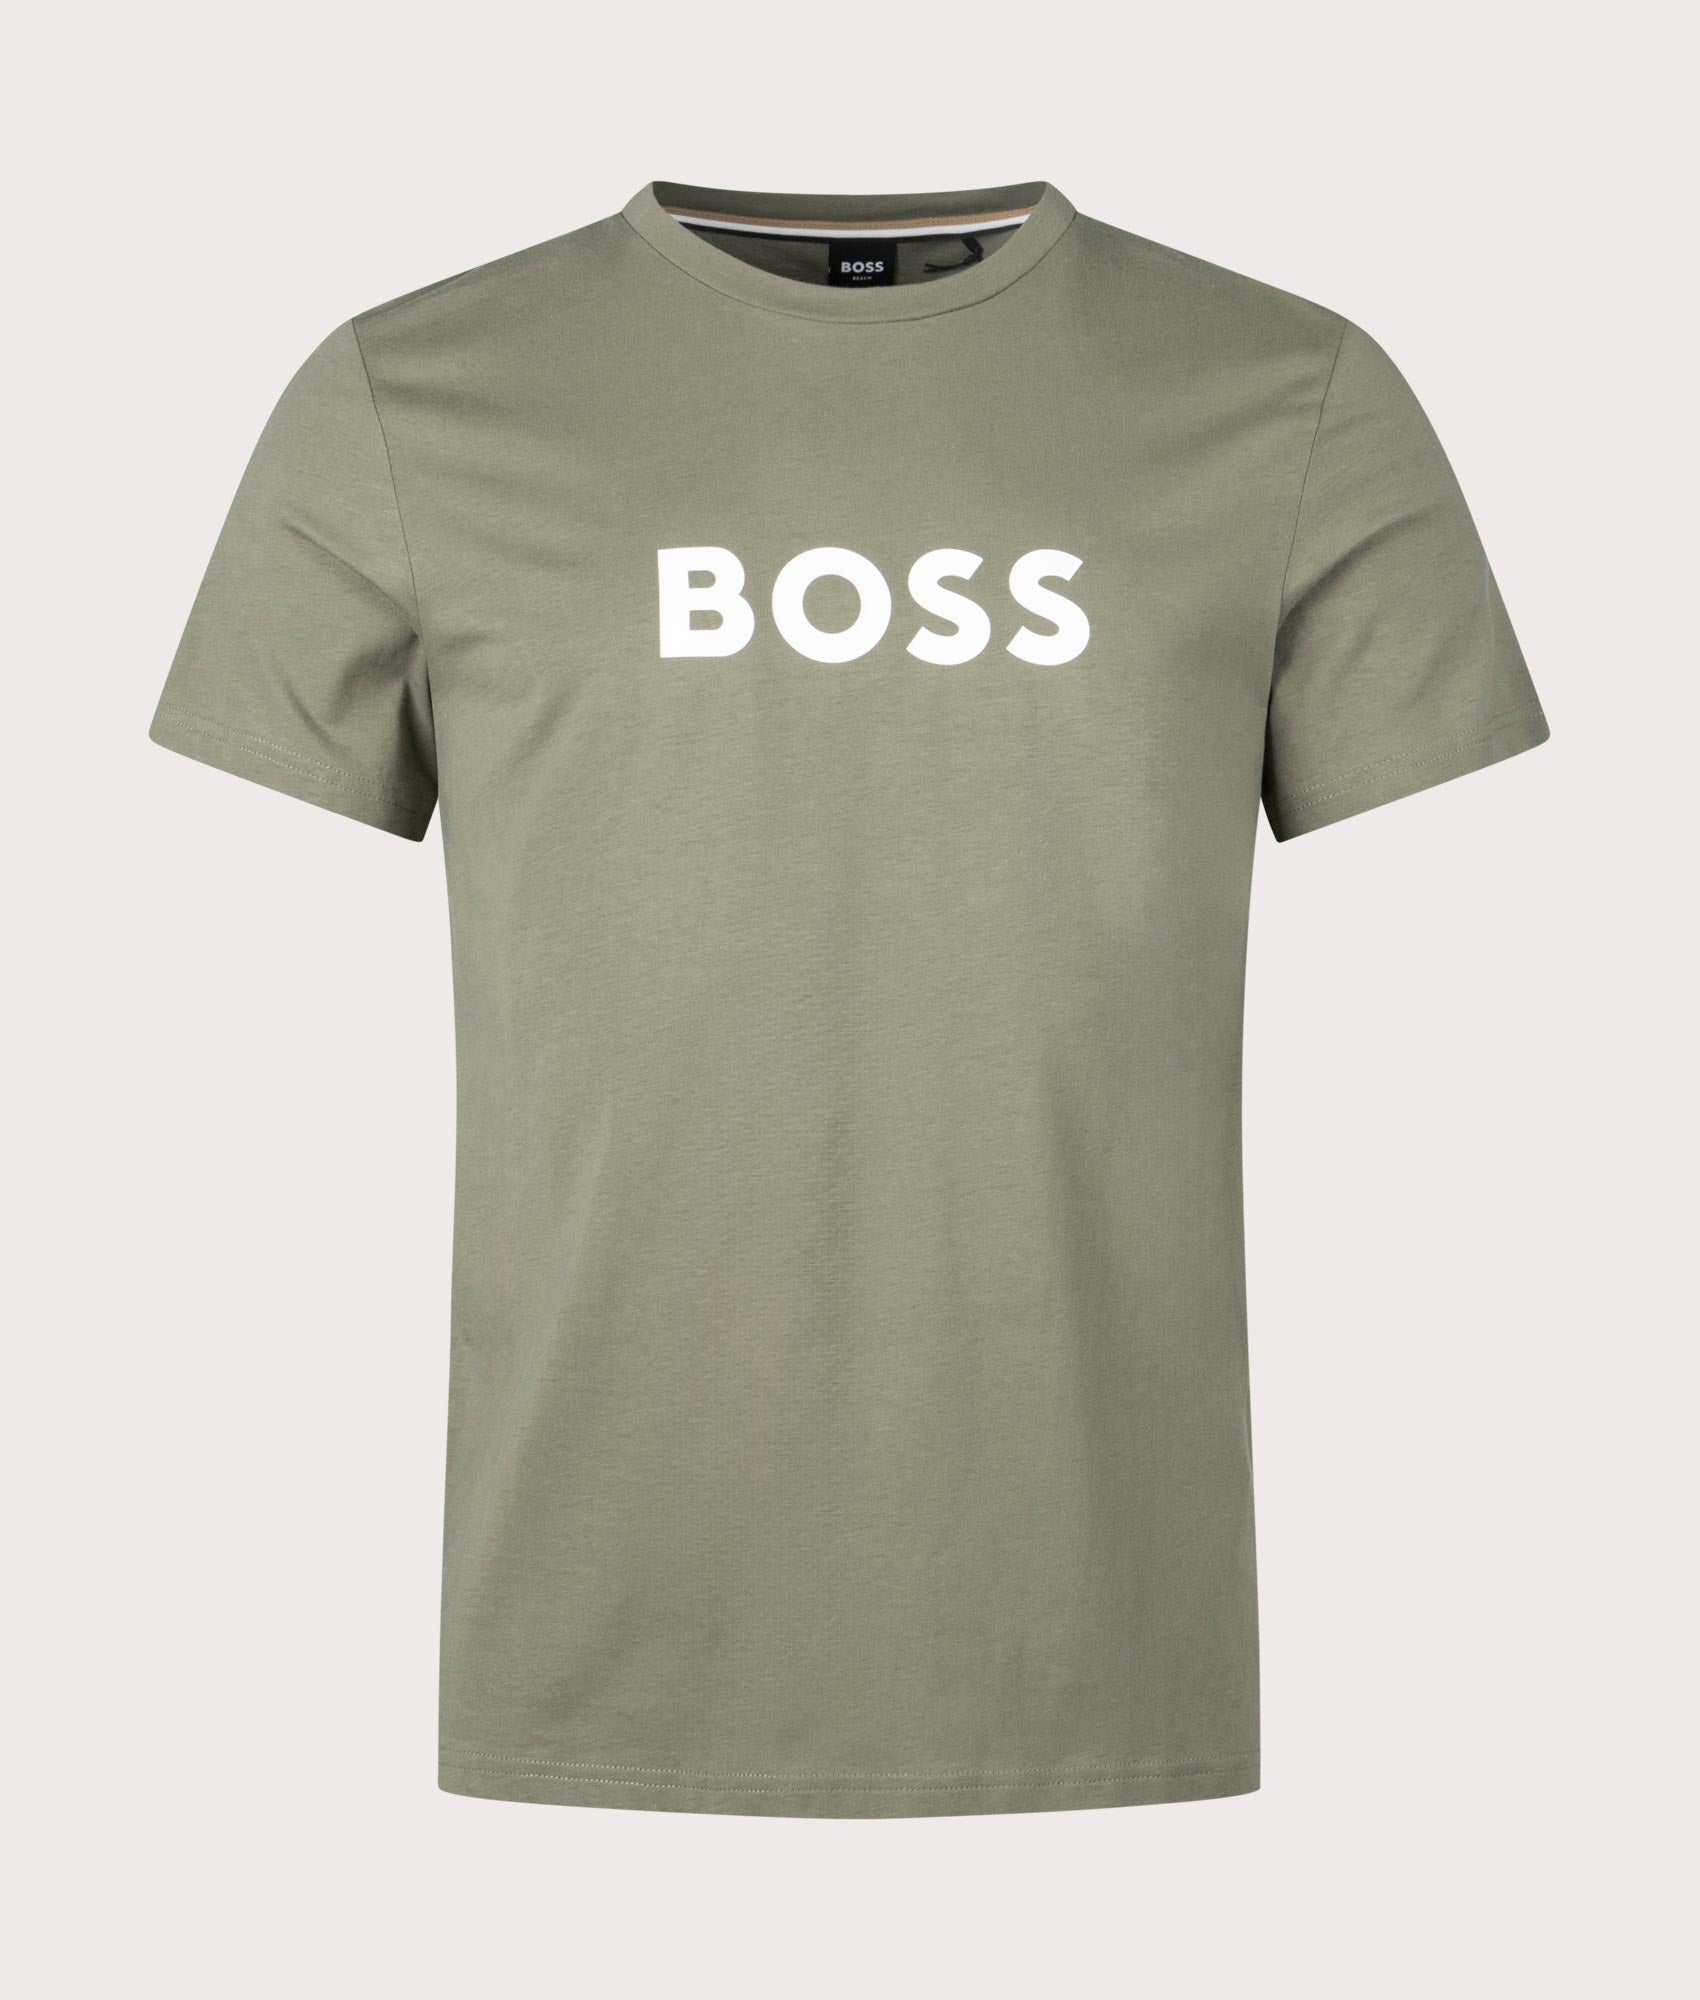 BOSS Mens Round Neck T-Shirt - Colour: 250 Beige/Khaki - Size: XXL